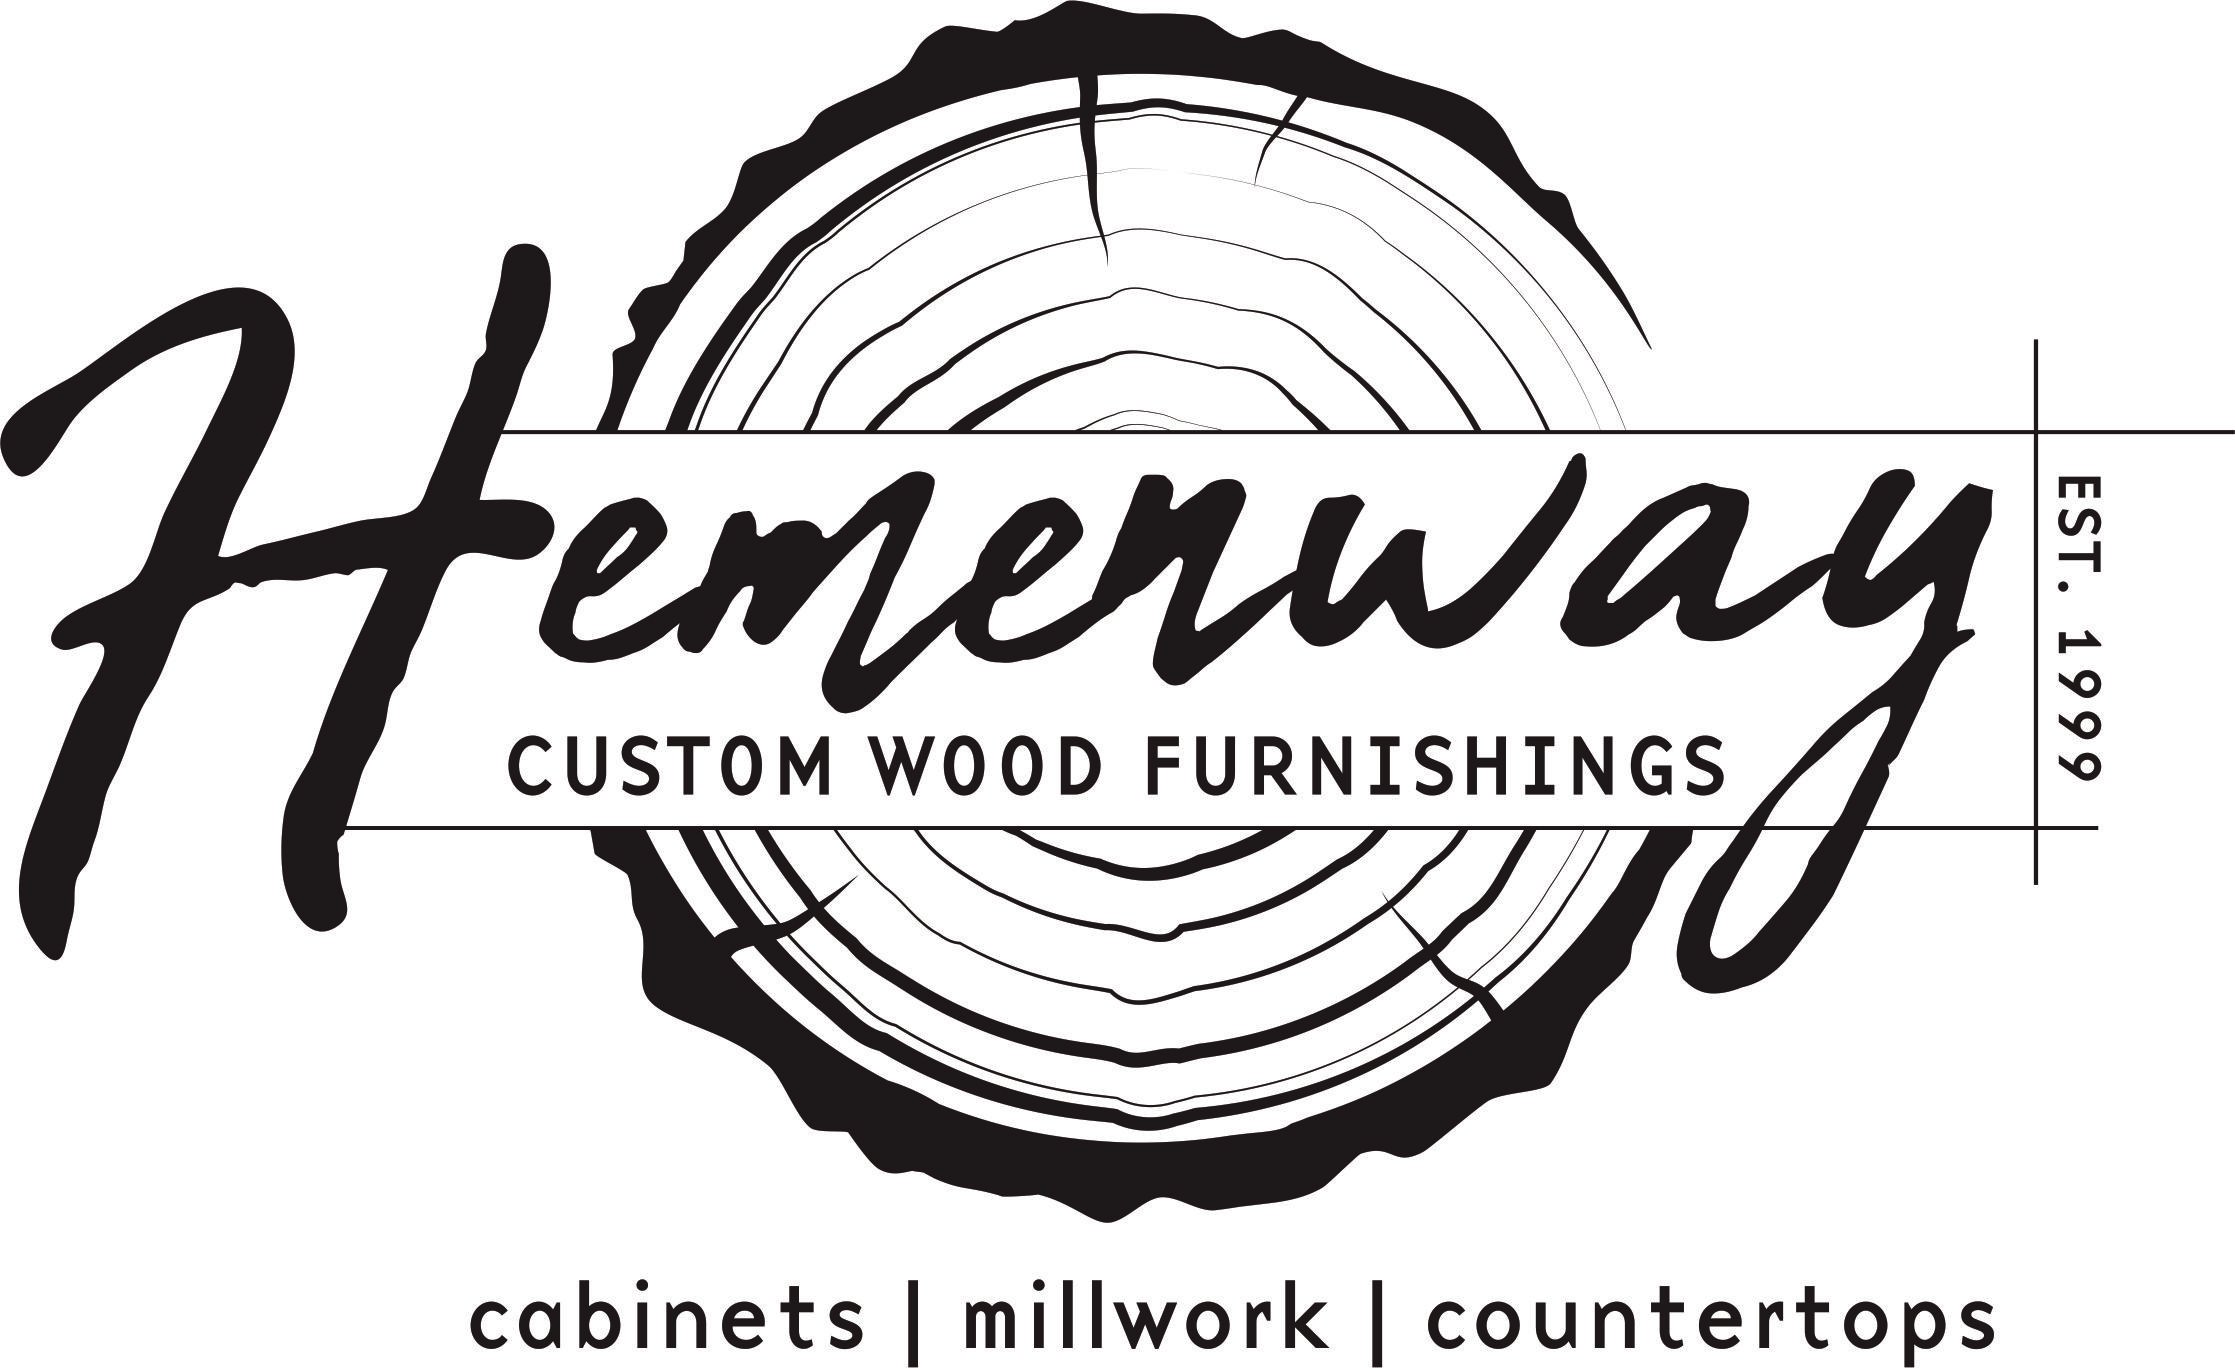 Hemenway Custom Wood Furnishings